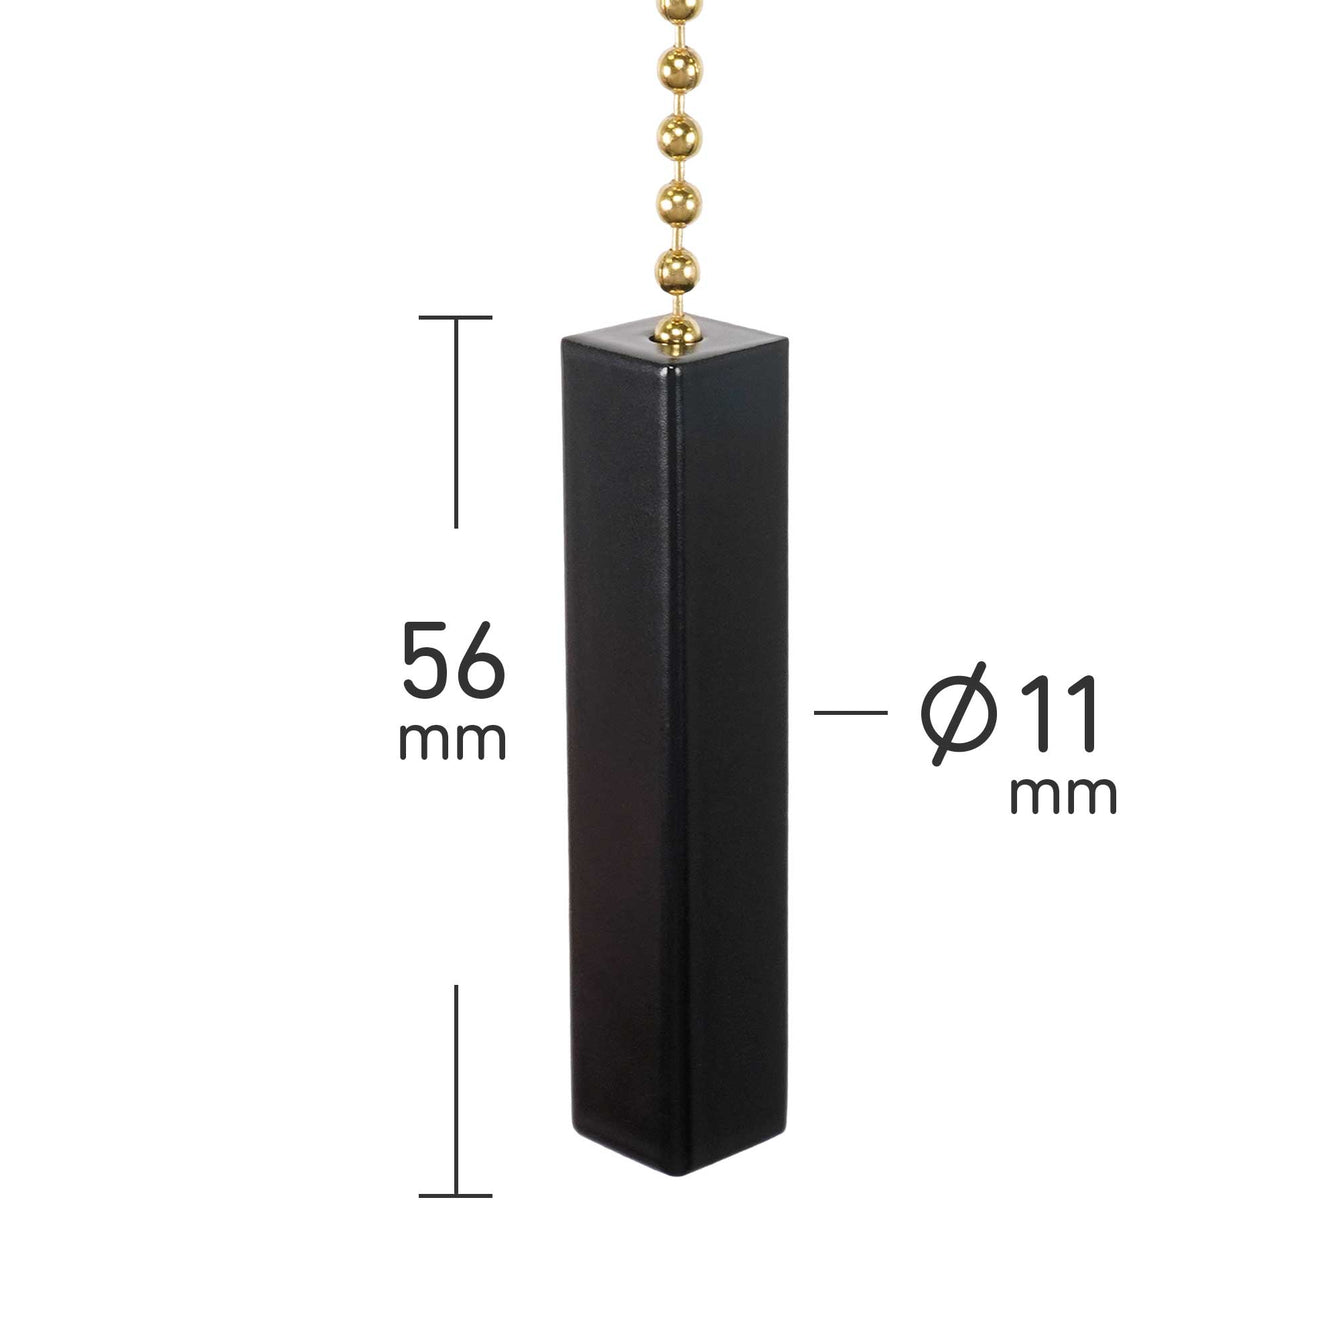 ElekTek Premium Brass Bathroom Light Pull Cord Switch Kit with Pull Chain Handle Cream Disc / Brass